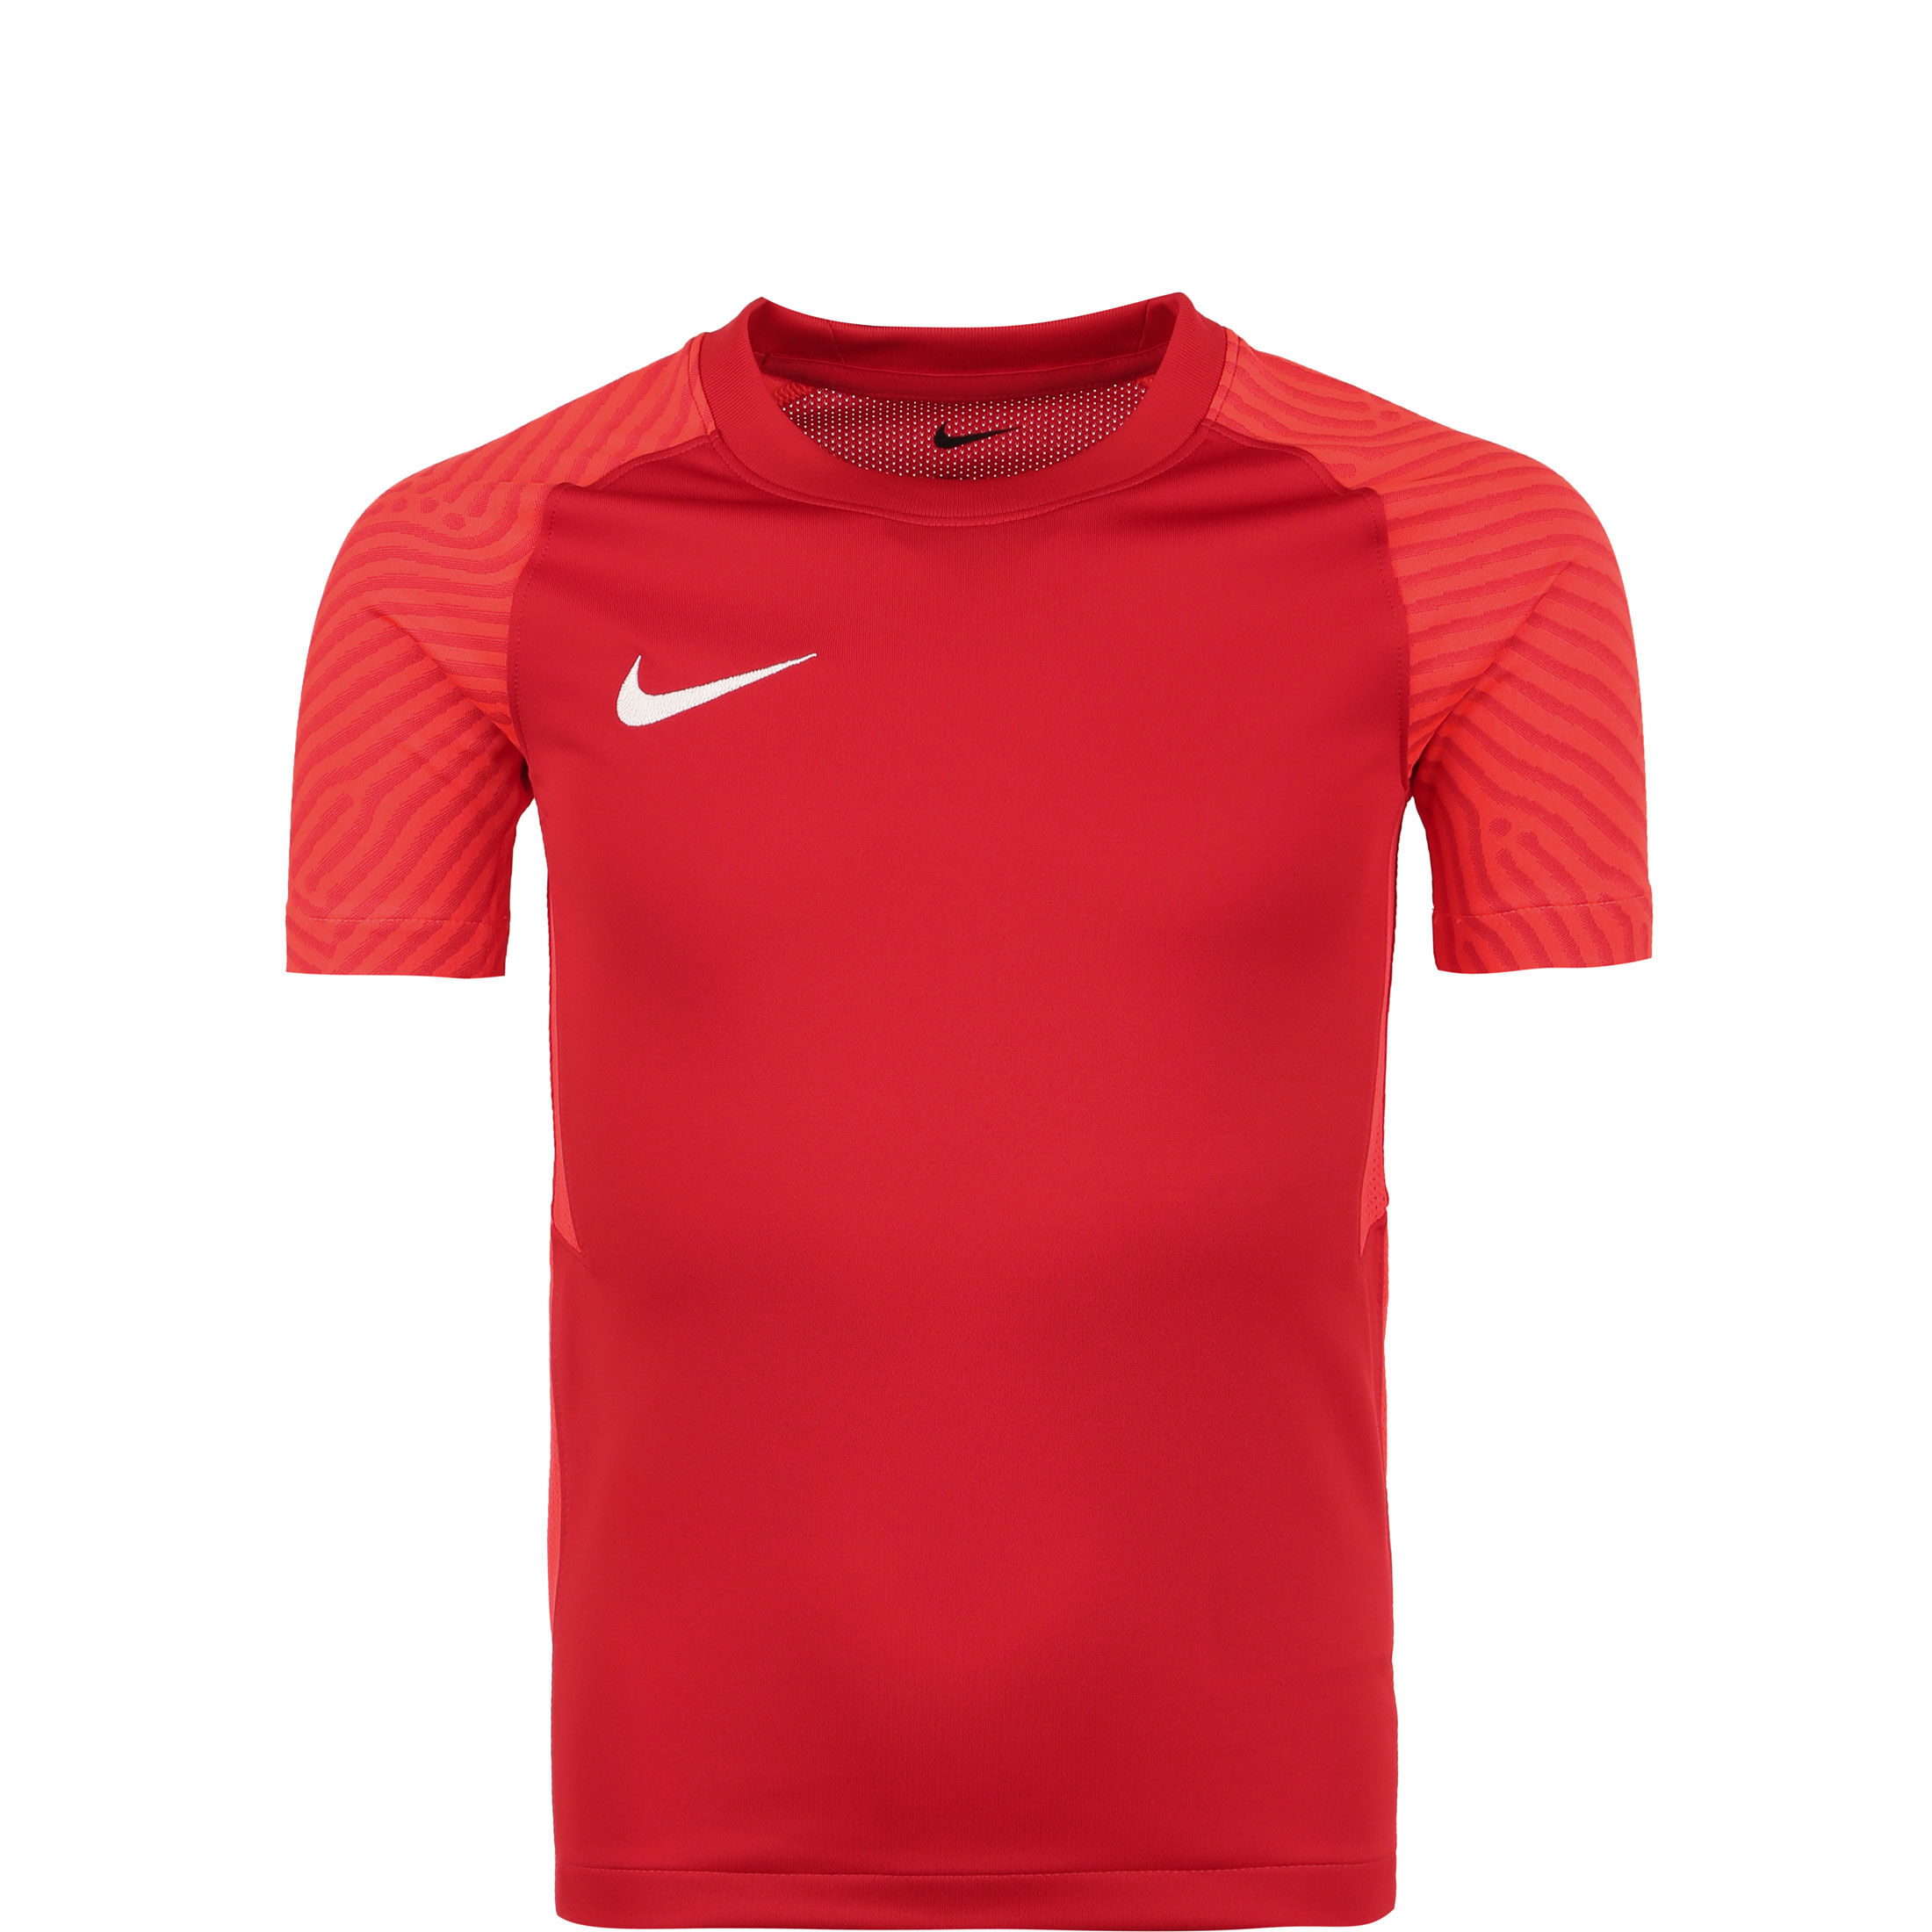 Спортивная футболка Nike Fußballtrikot Strike II, красный футболка игровая подростковая nike strike ii cw3557 100